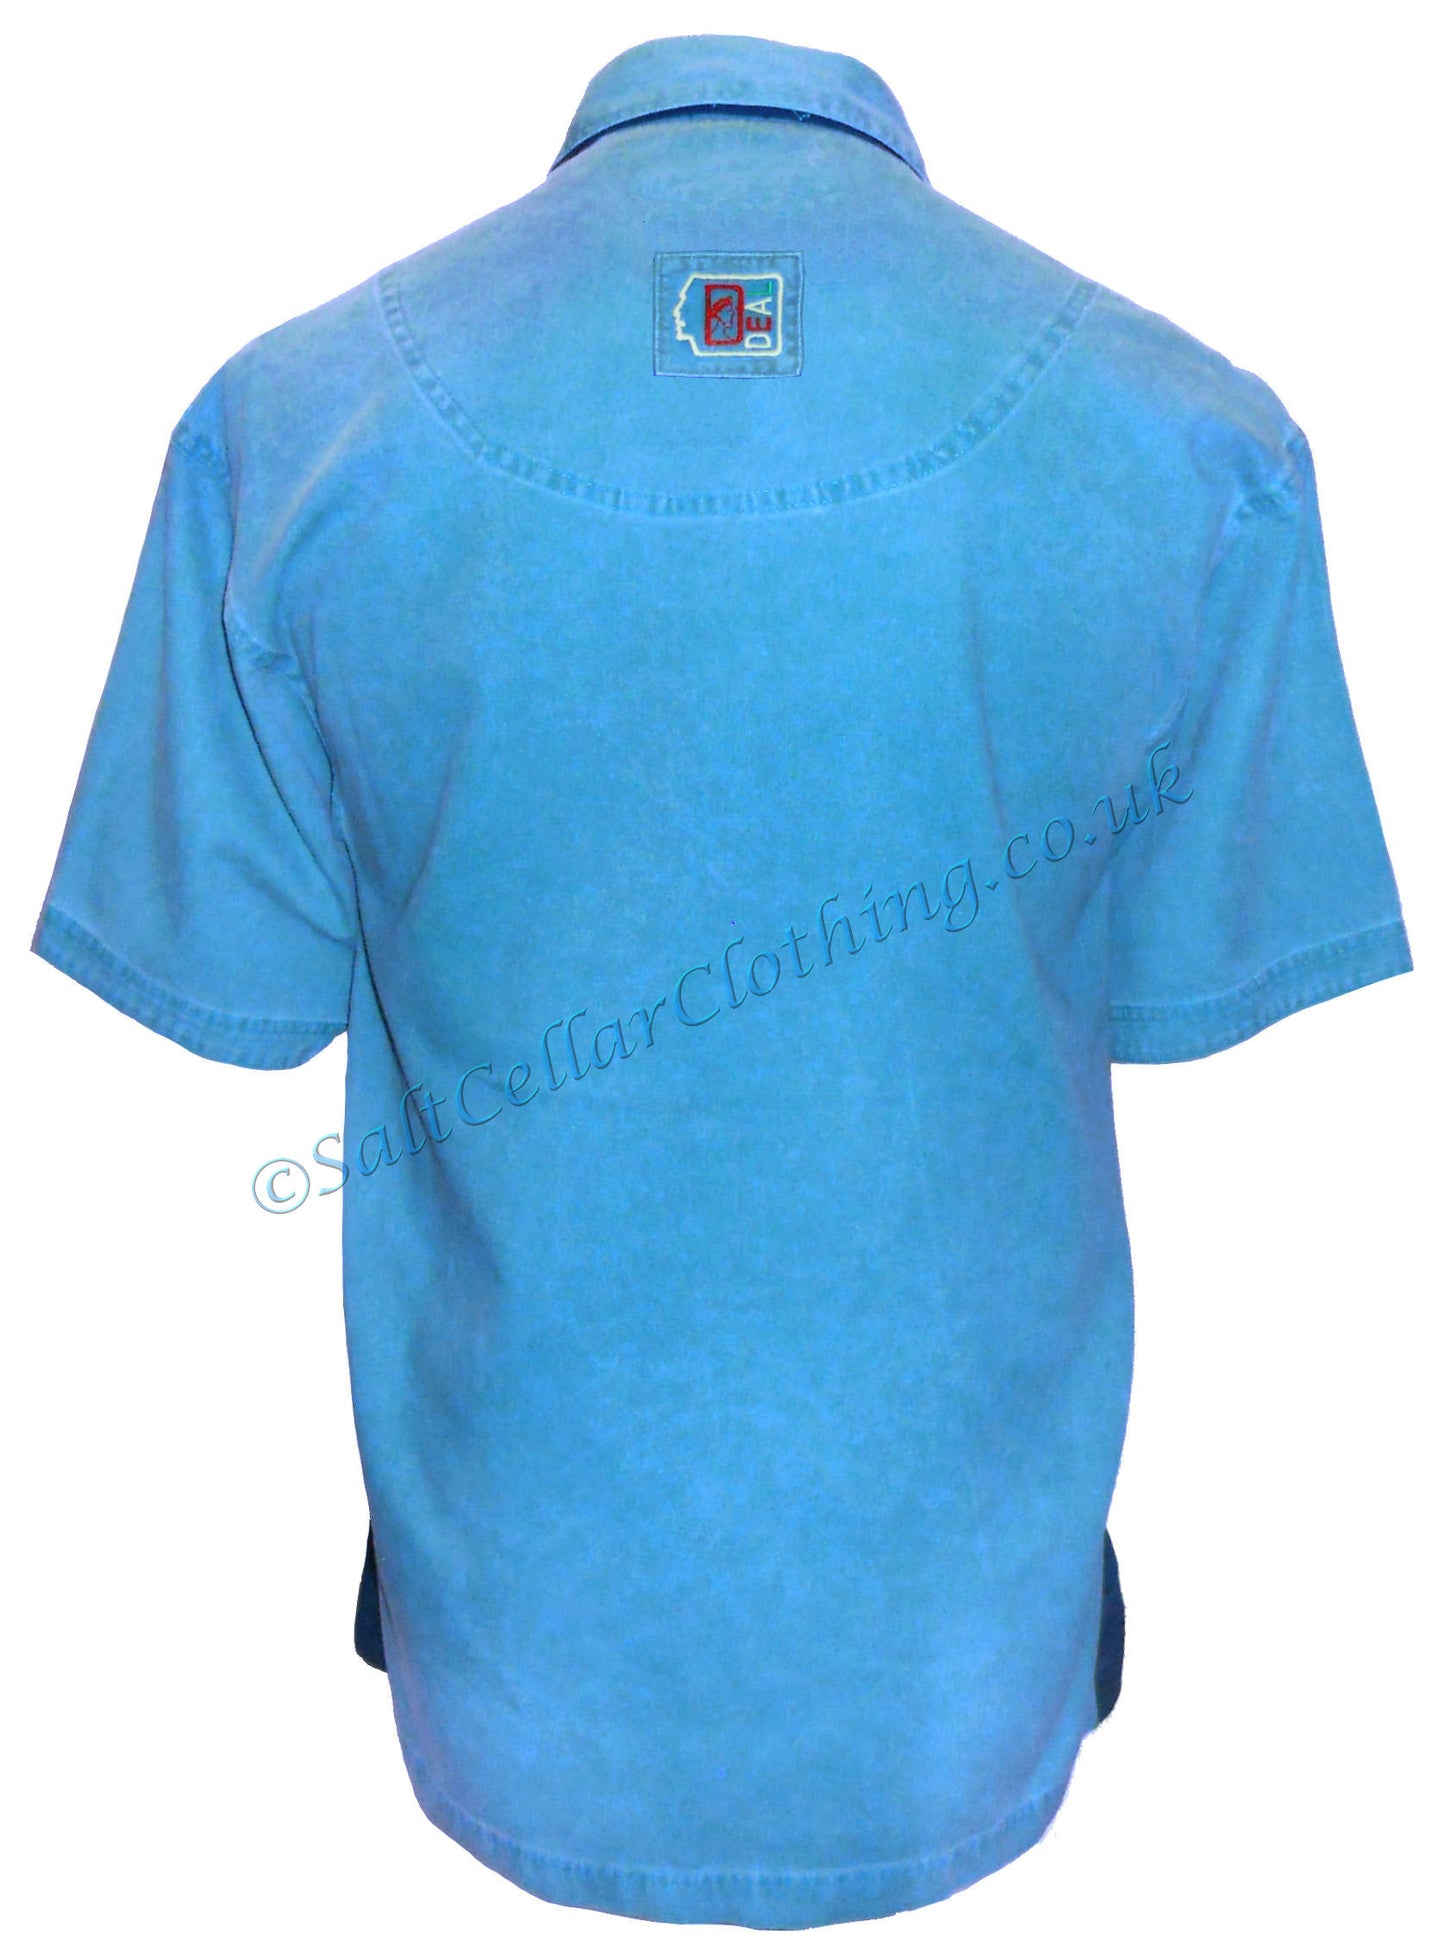 Deal Clothing Mens 'AS113' Short-Sleeved Pullover Shirt - Sky Blue